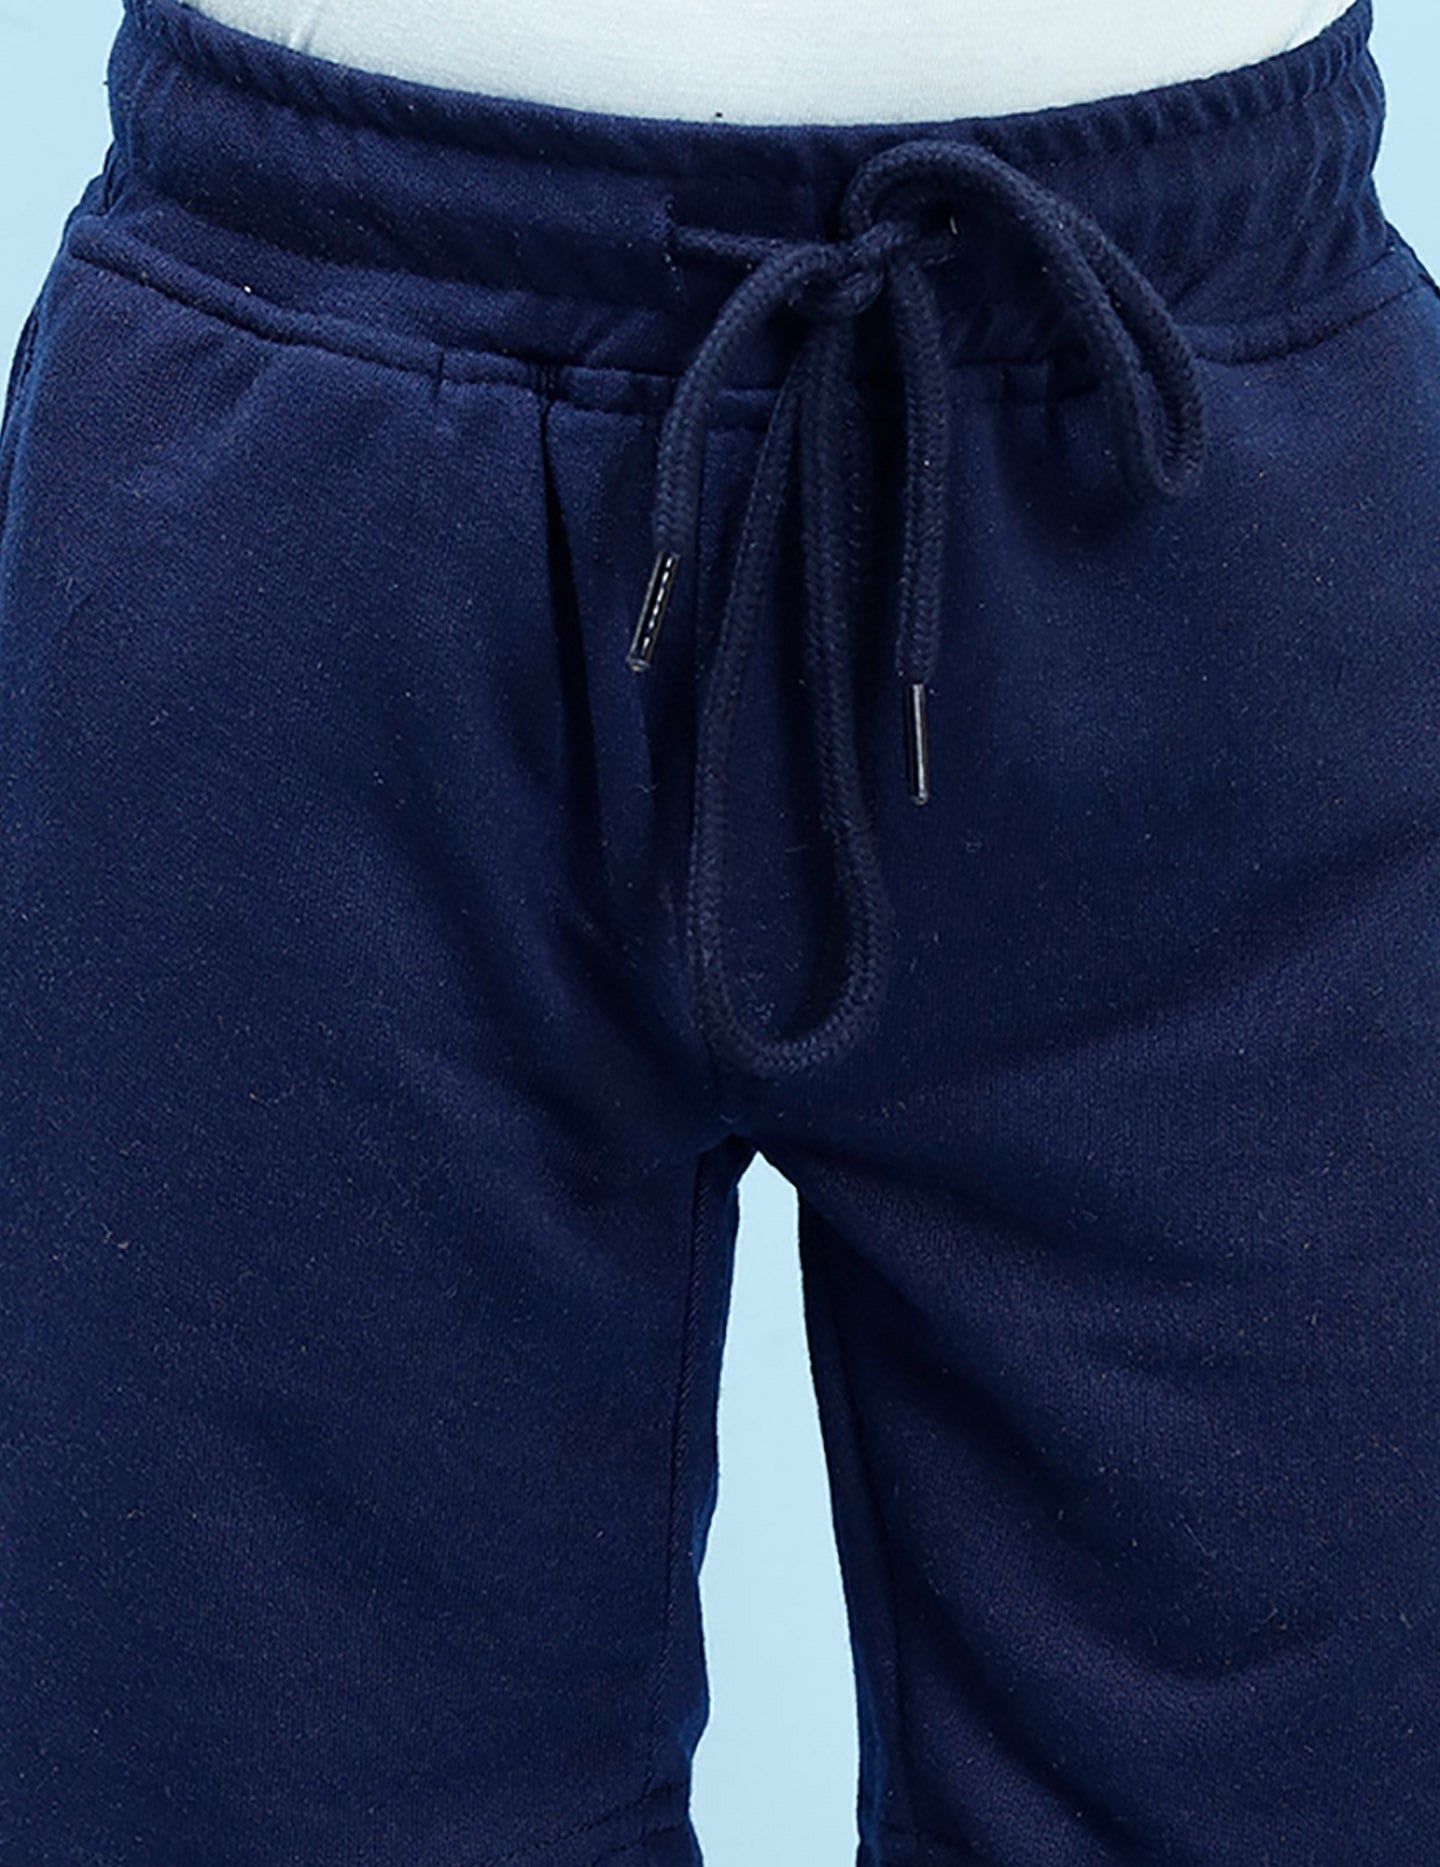 Nusyl Boxes Printed Navy Blue Boys Shorts